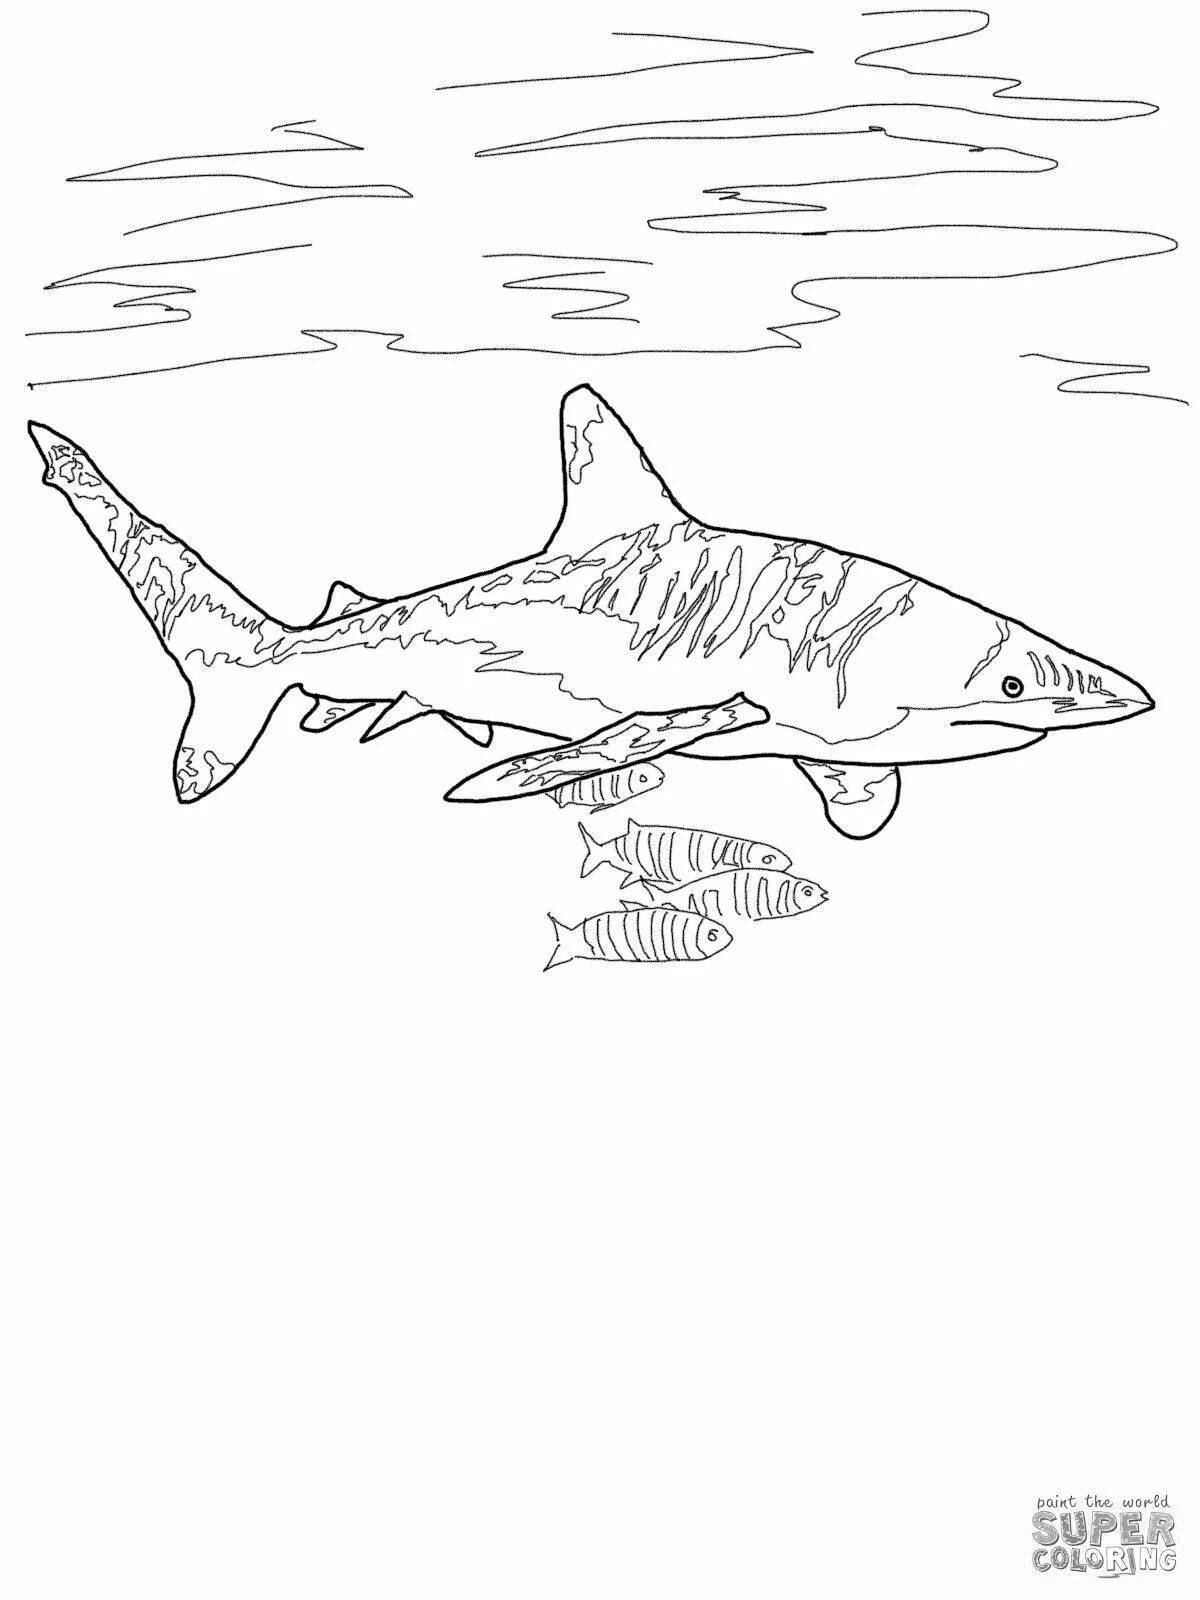 Fat shark glamor coloring book